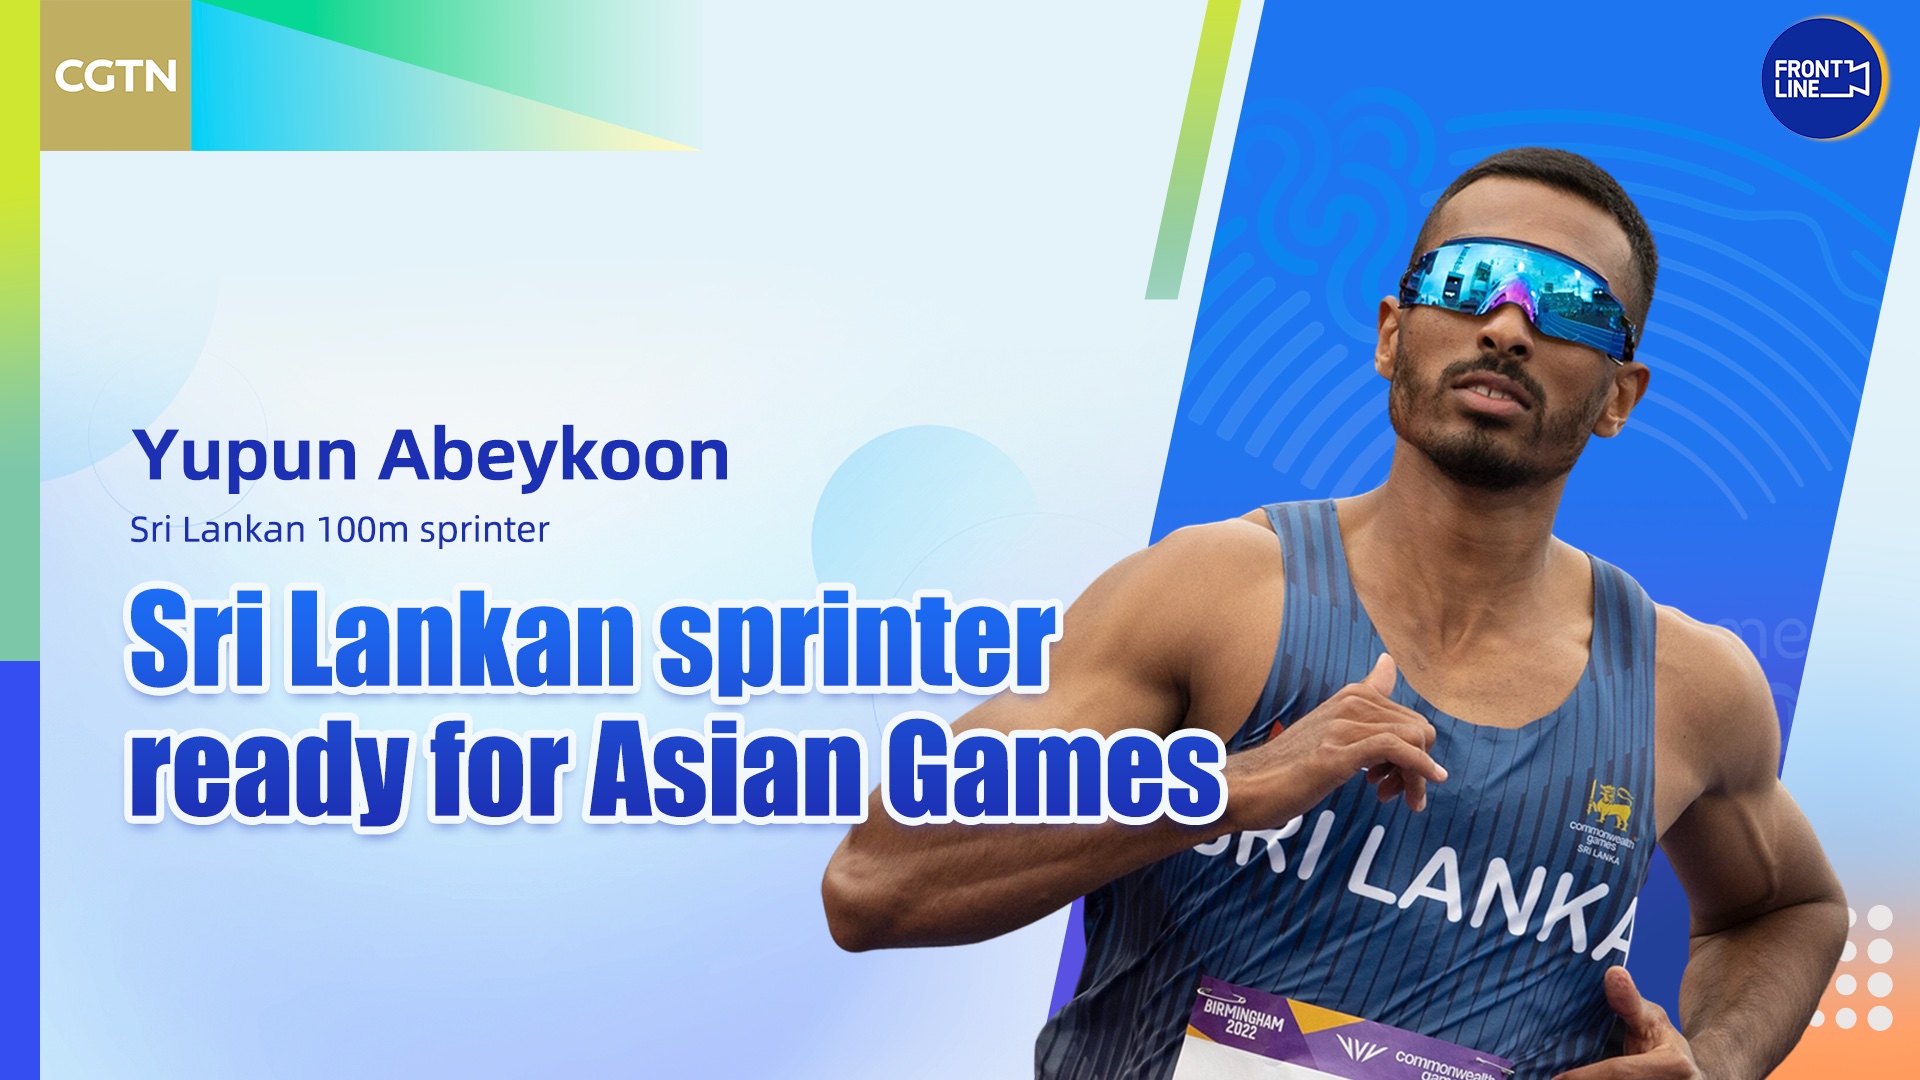 Sri Lankan sprinter ready for Asian Games